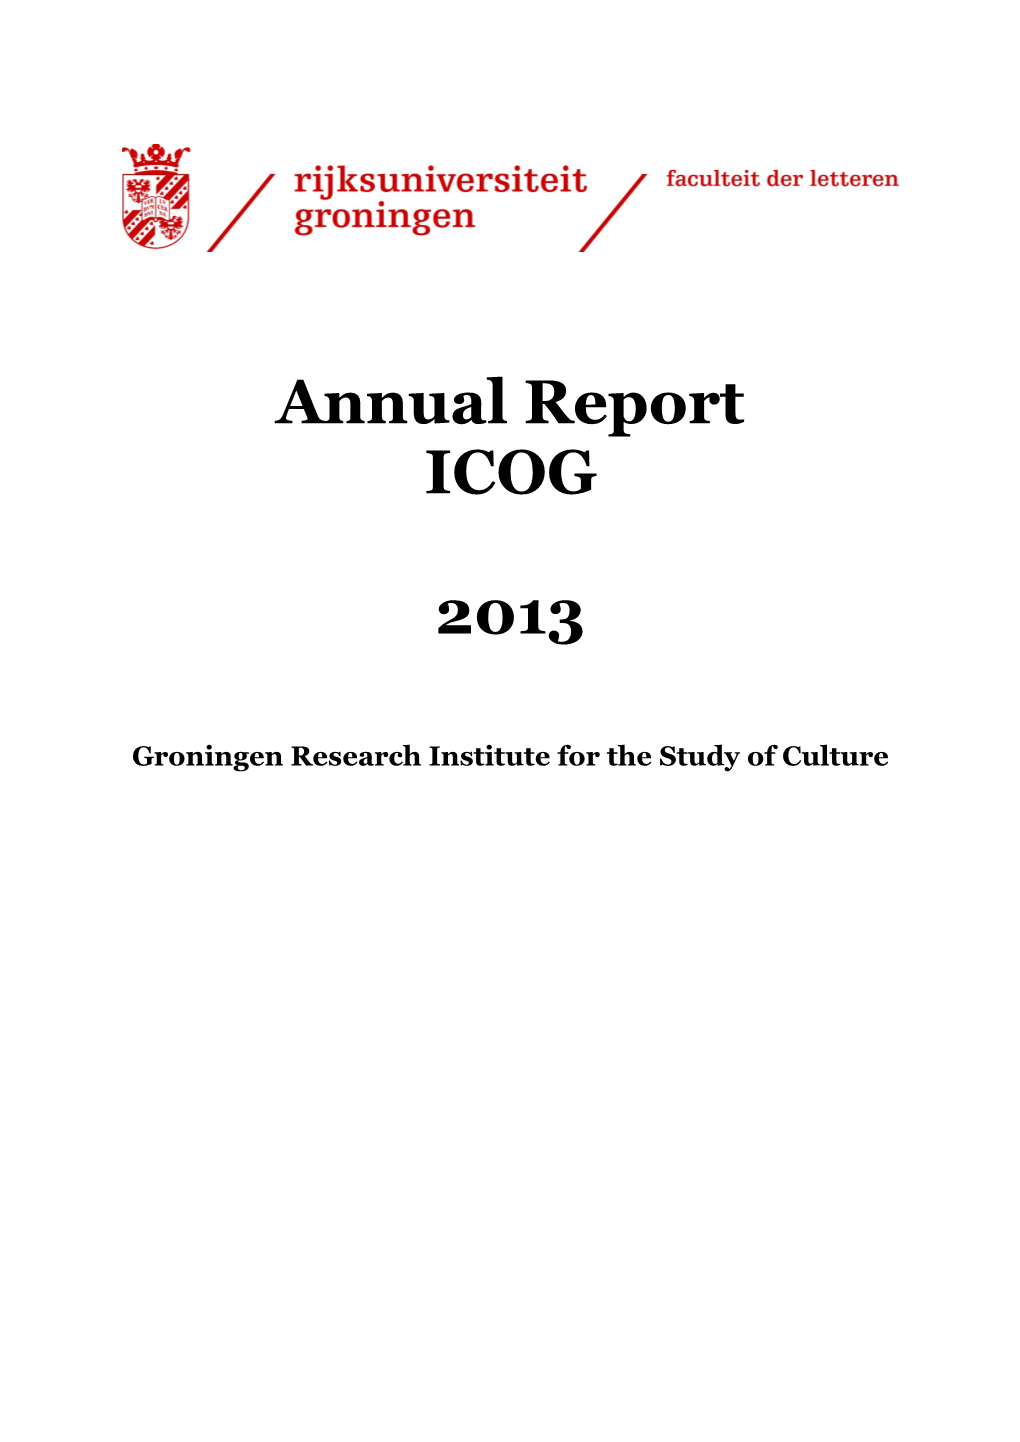 Annual Report ICOG 2013